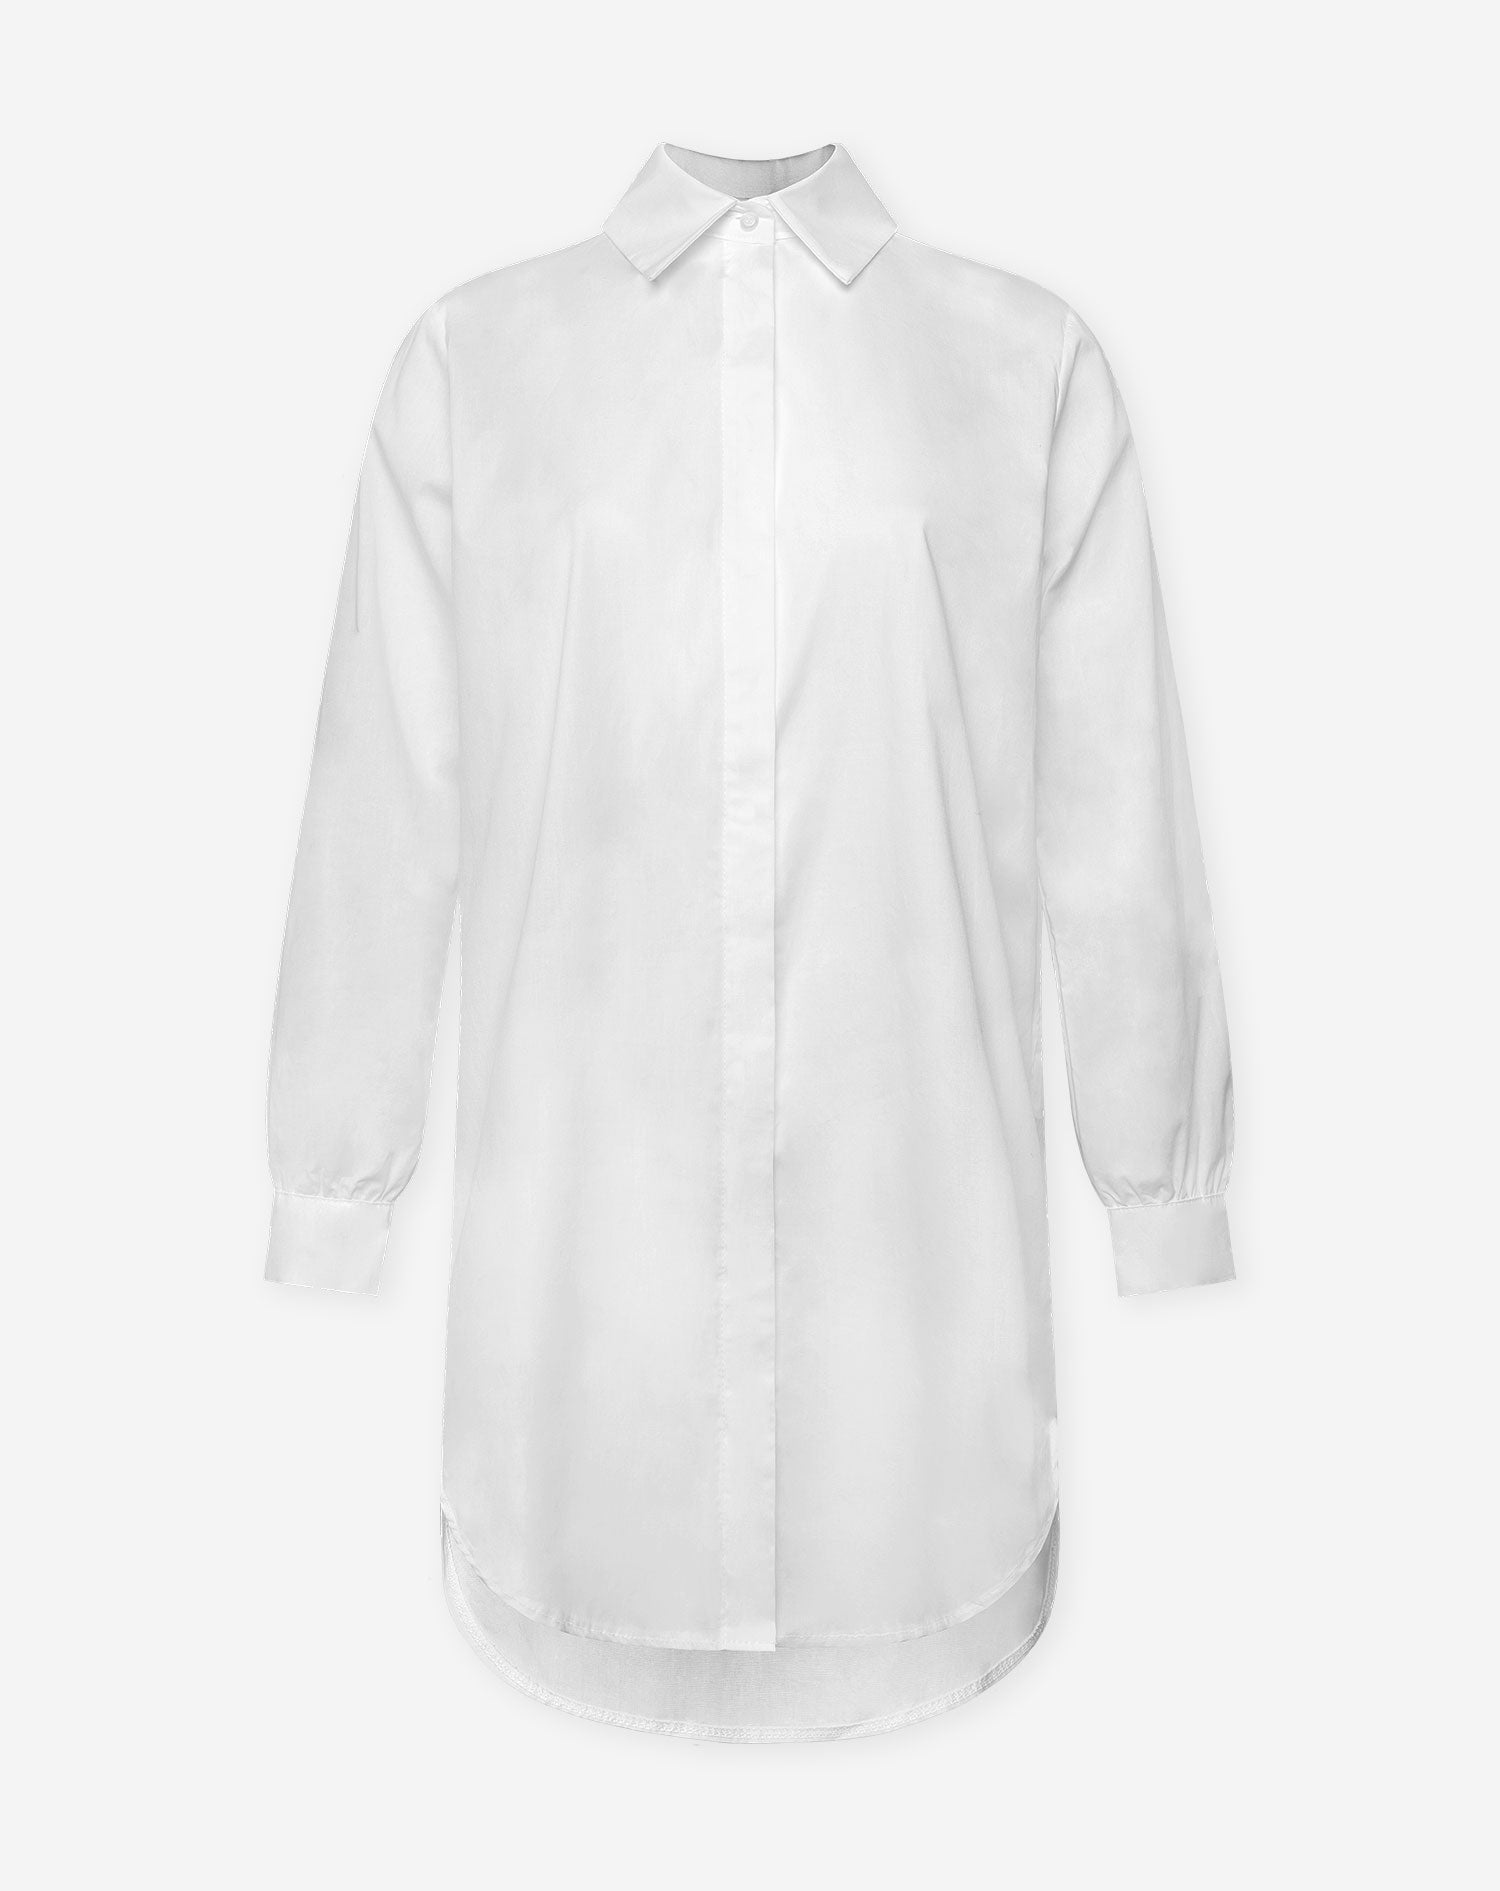 ESSENTIAL POPLIN BLOUSE DRESS WHITE